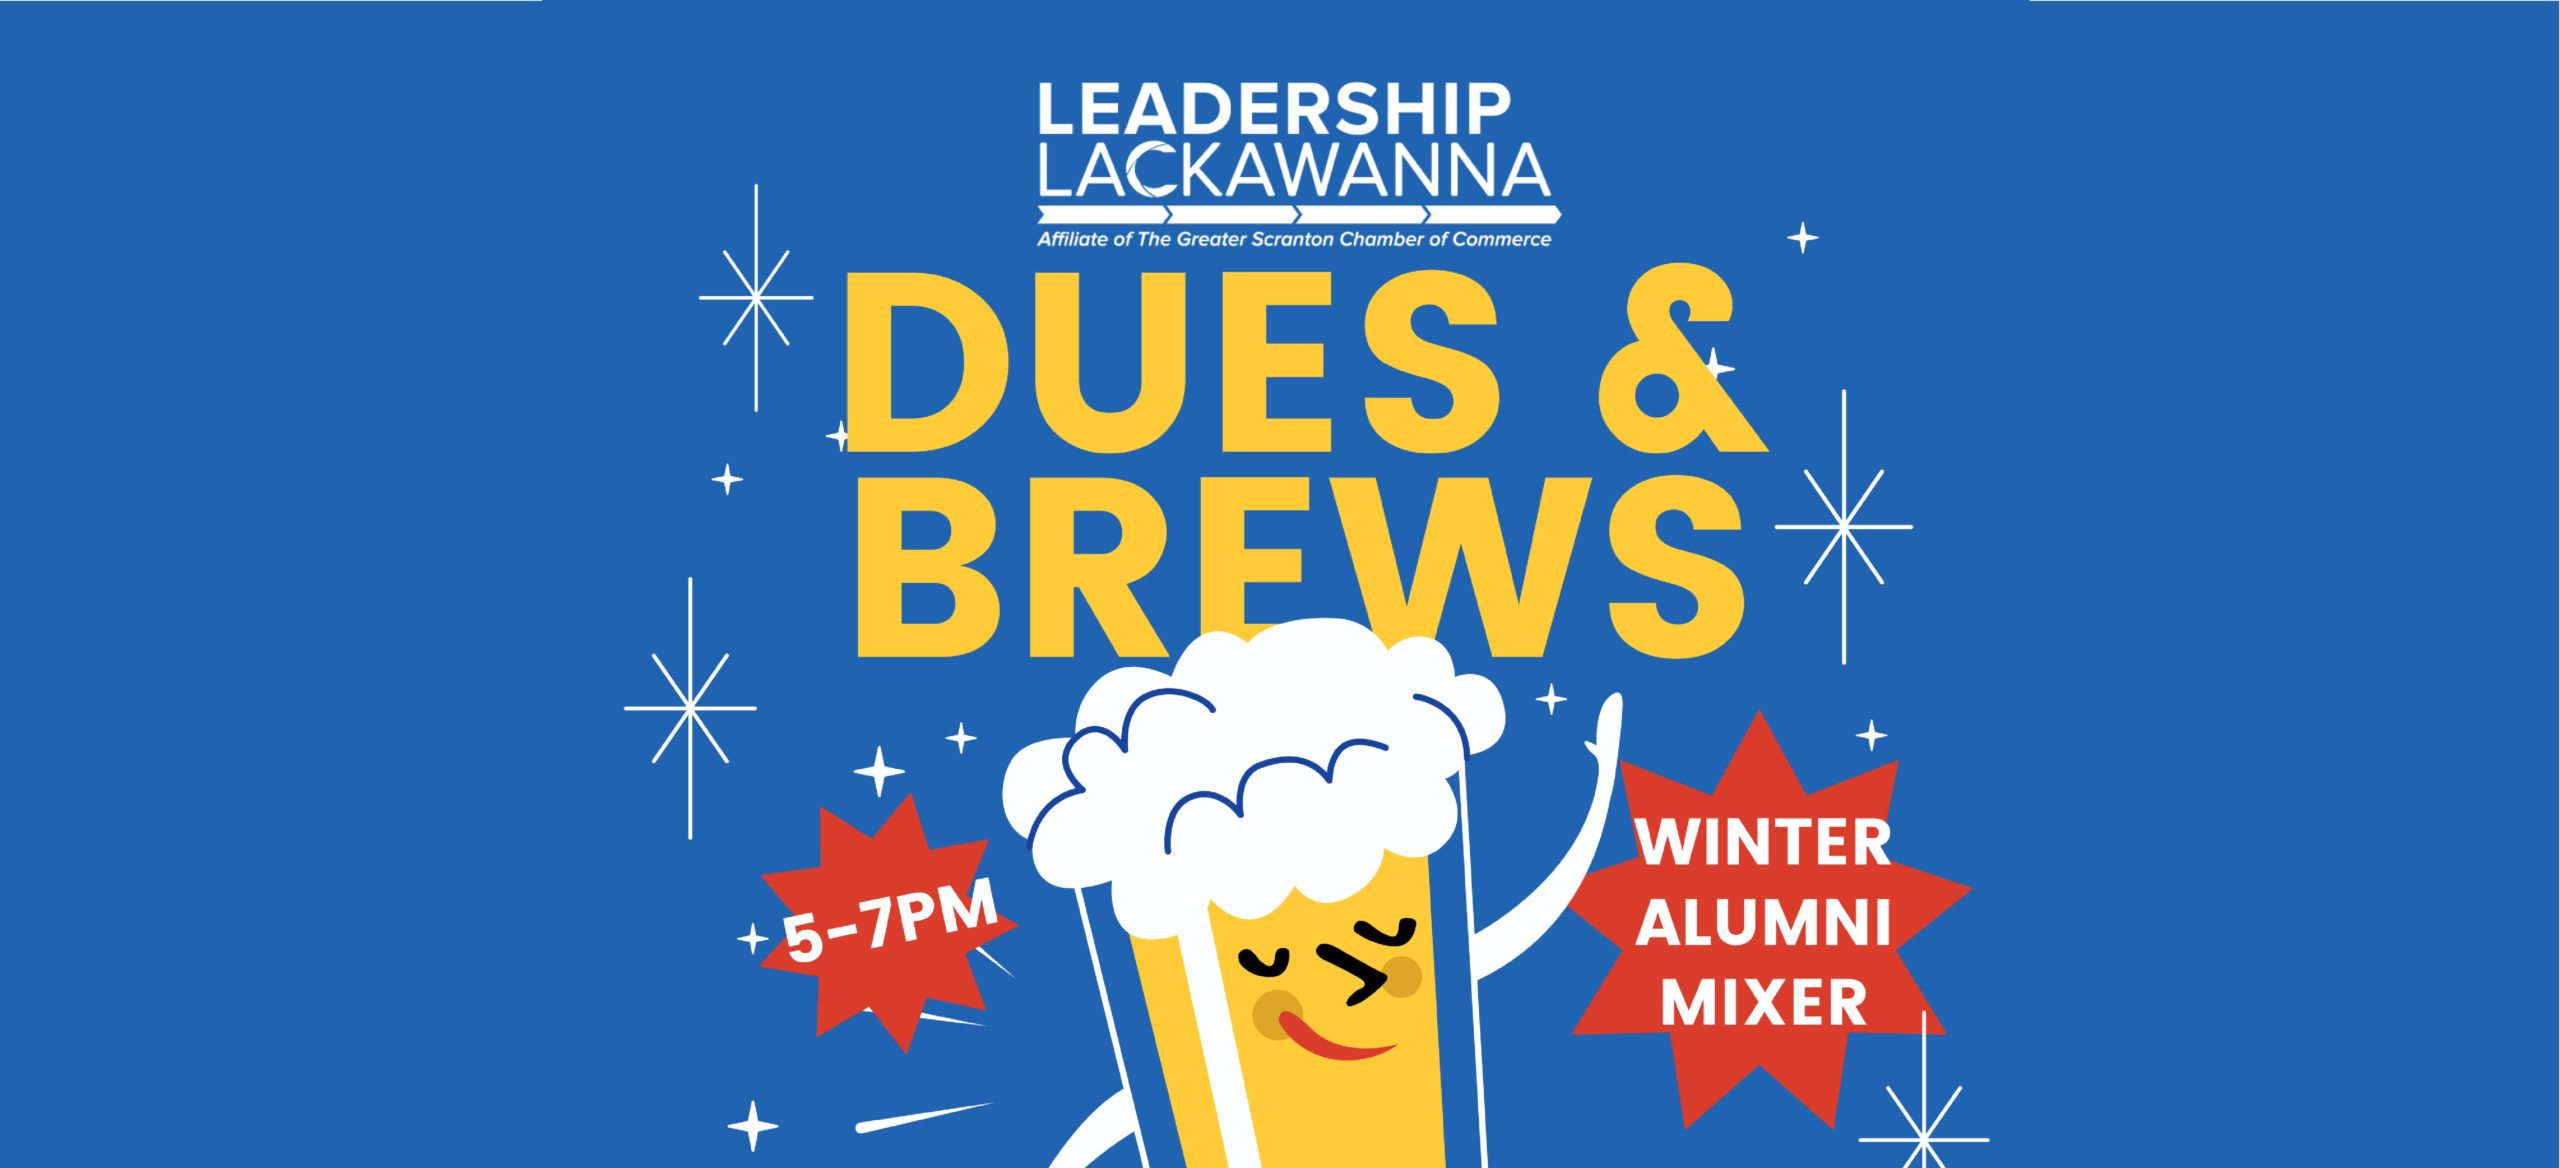 Dues and Brews Leadership Lackawanna Alumni Mixer